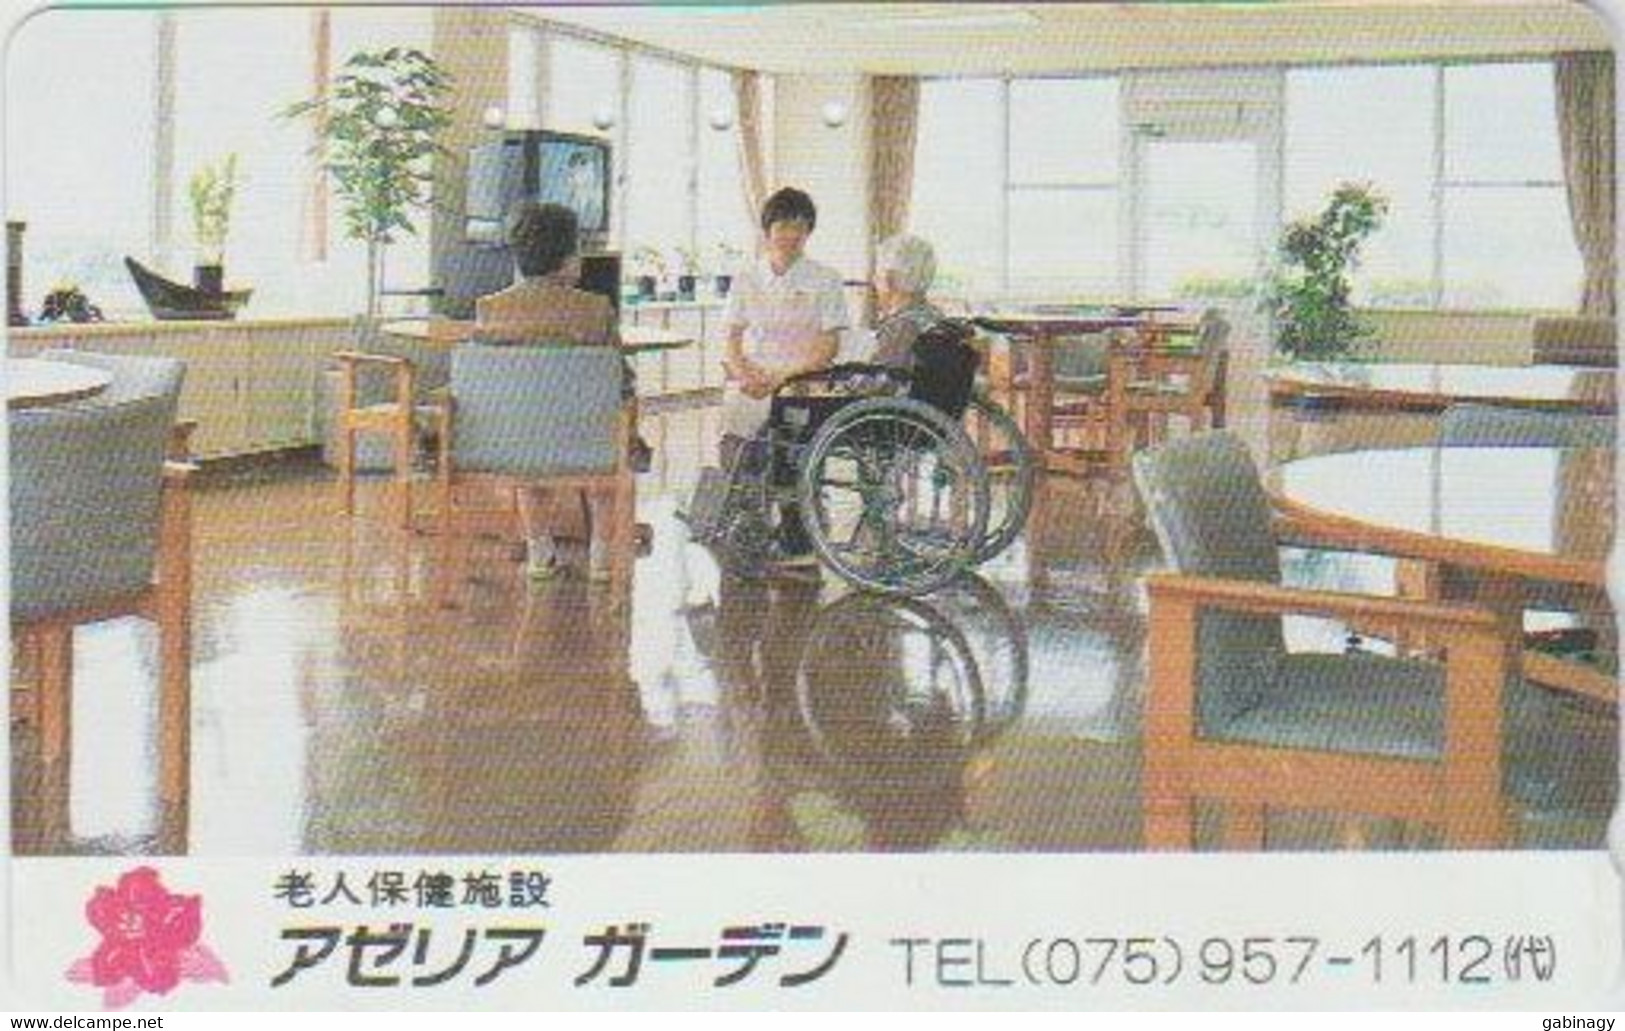 HEALTH - JAPAN-024 - 110-011 - Kultur